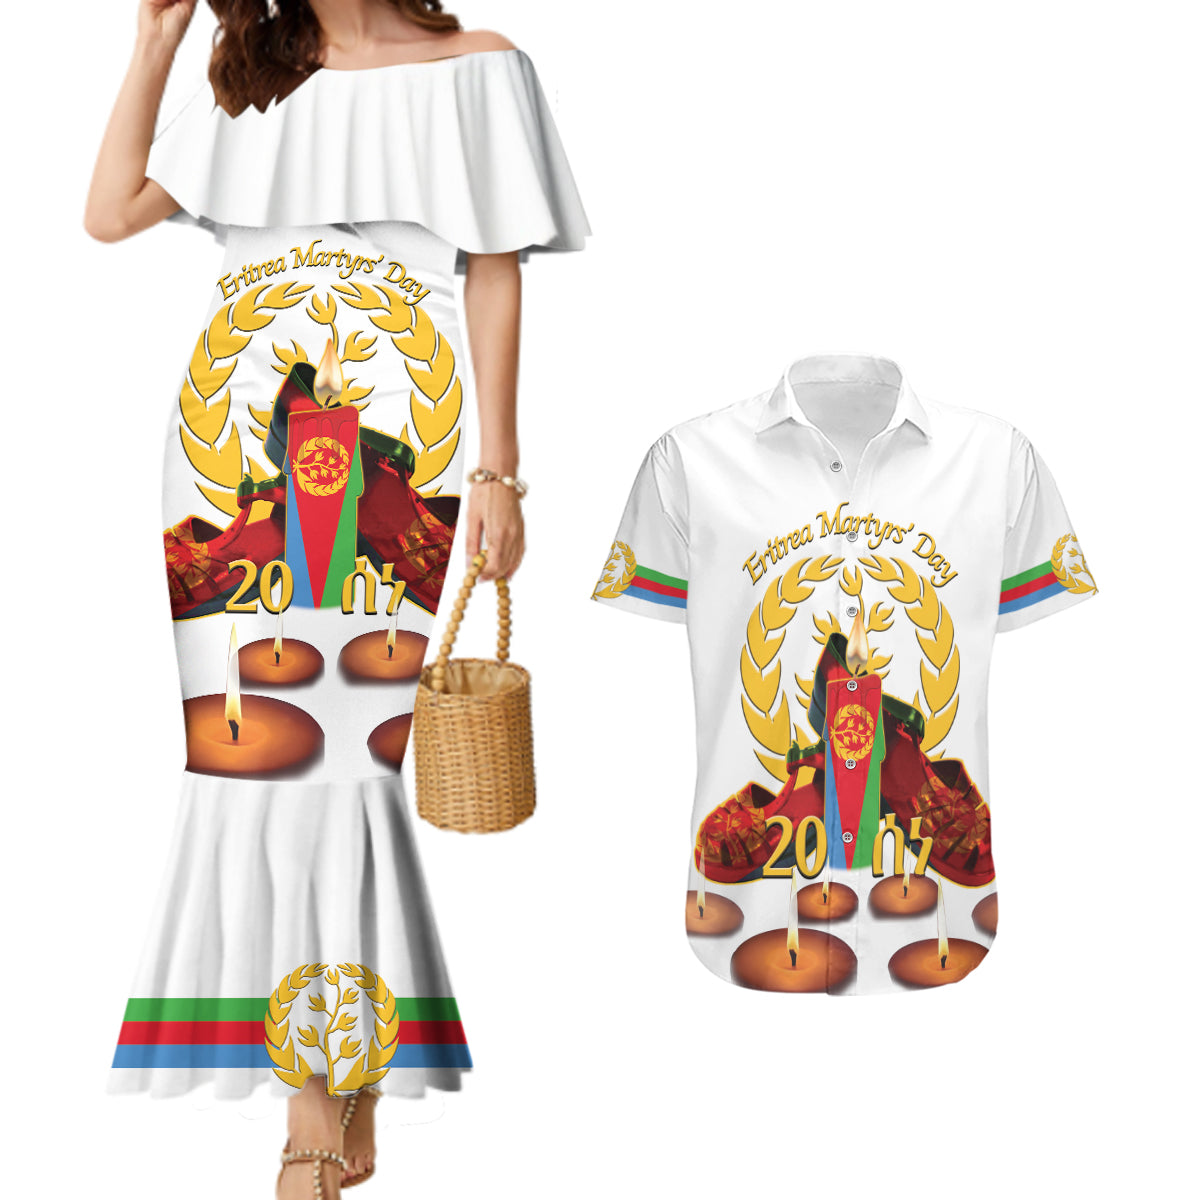 Custom Eritrea Martyrs' Day Couples Matching Mermaid Dress and Hawaiian Shirt 20 June Shida Shoes With Candles - White